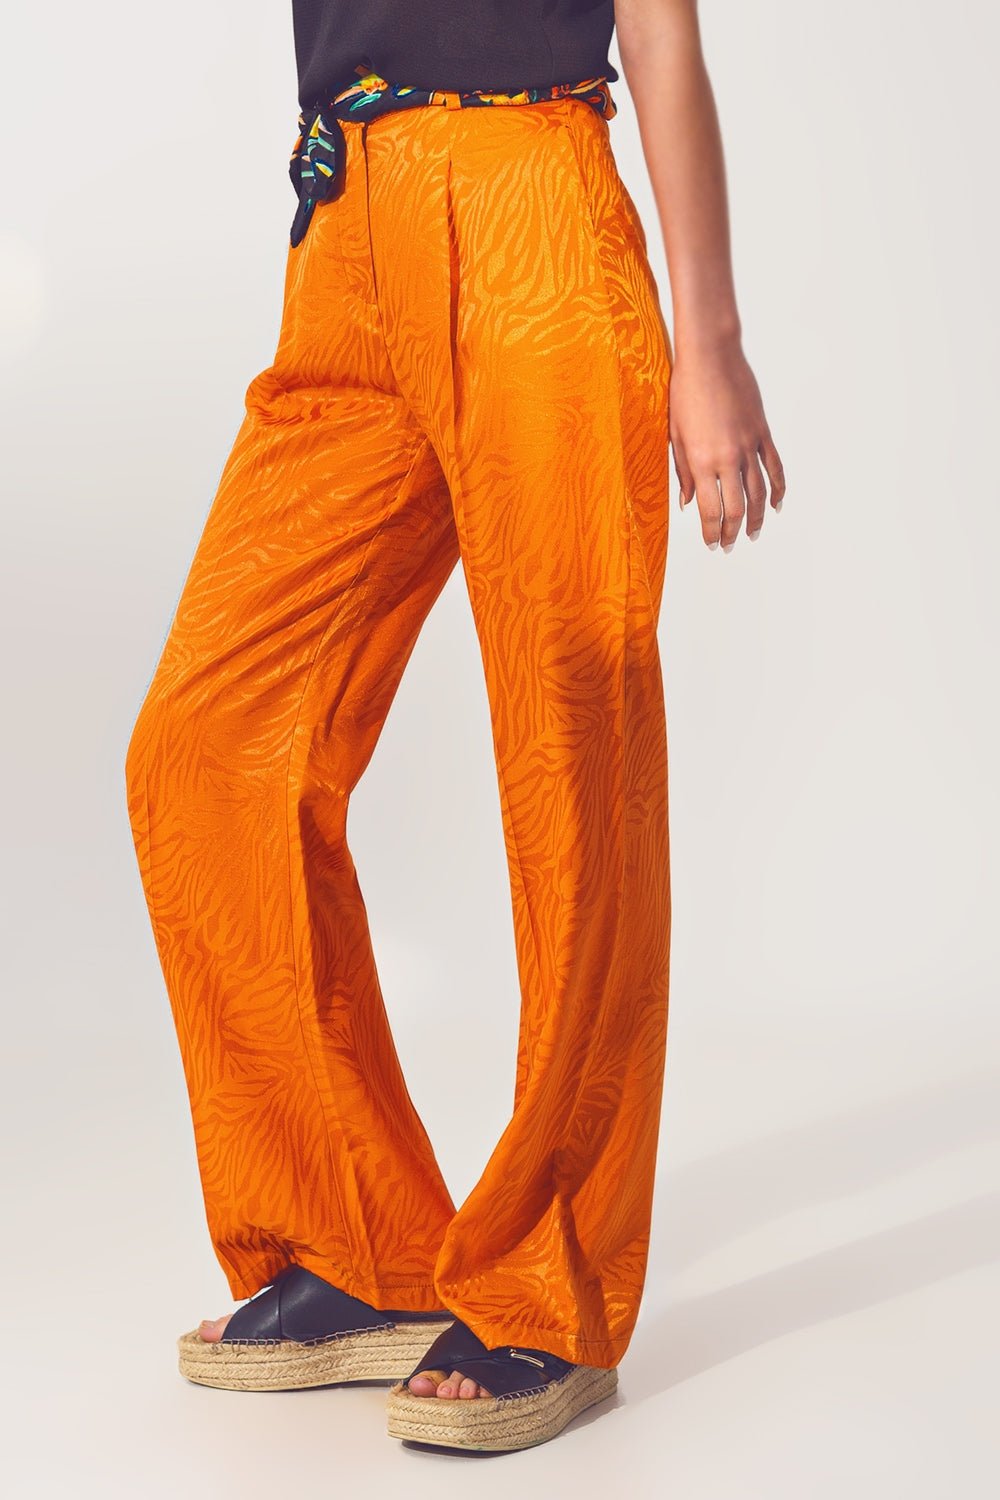 Loose Fit Zebra Print Pants in Orange - Mack & Harvie